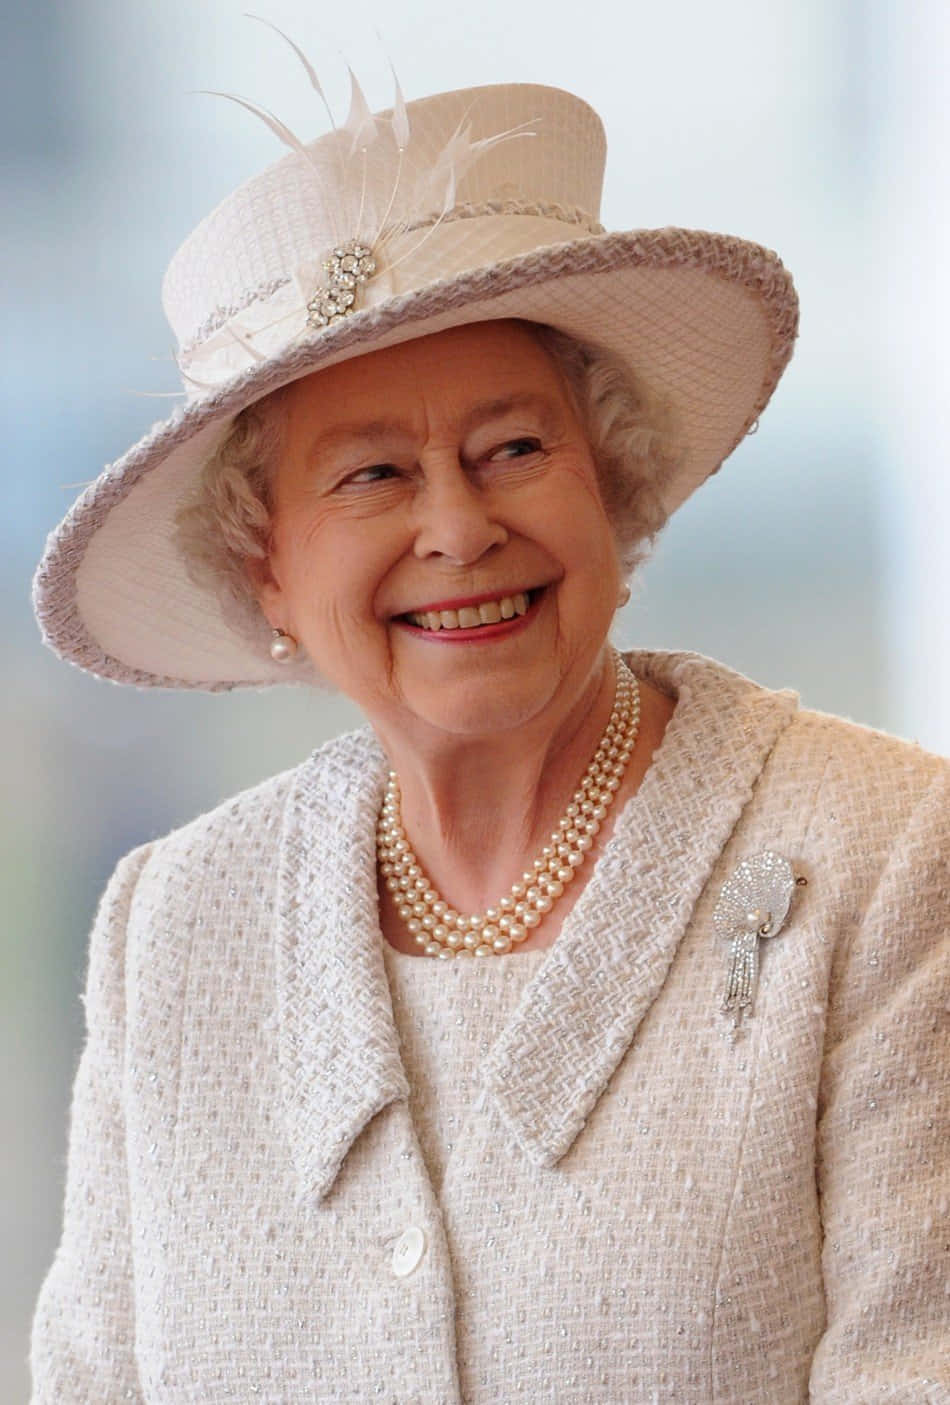 Glamorous Queen Elizabeth in Regal Attire